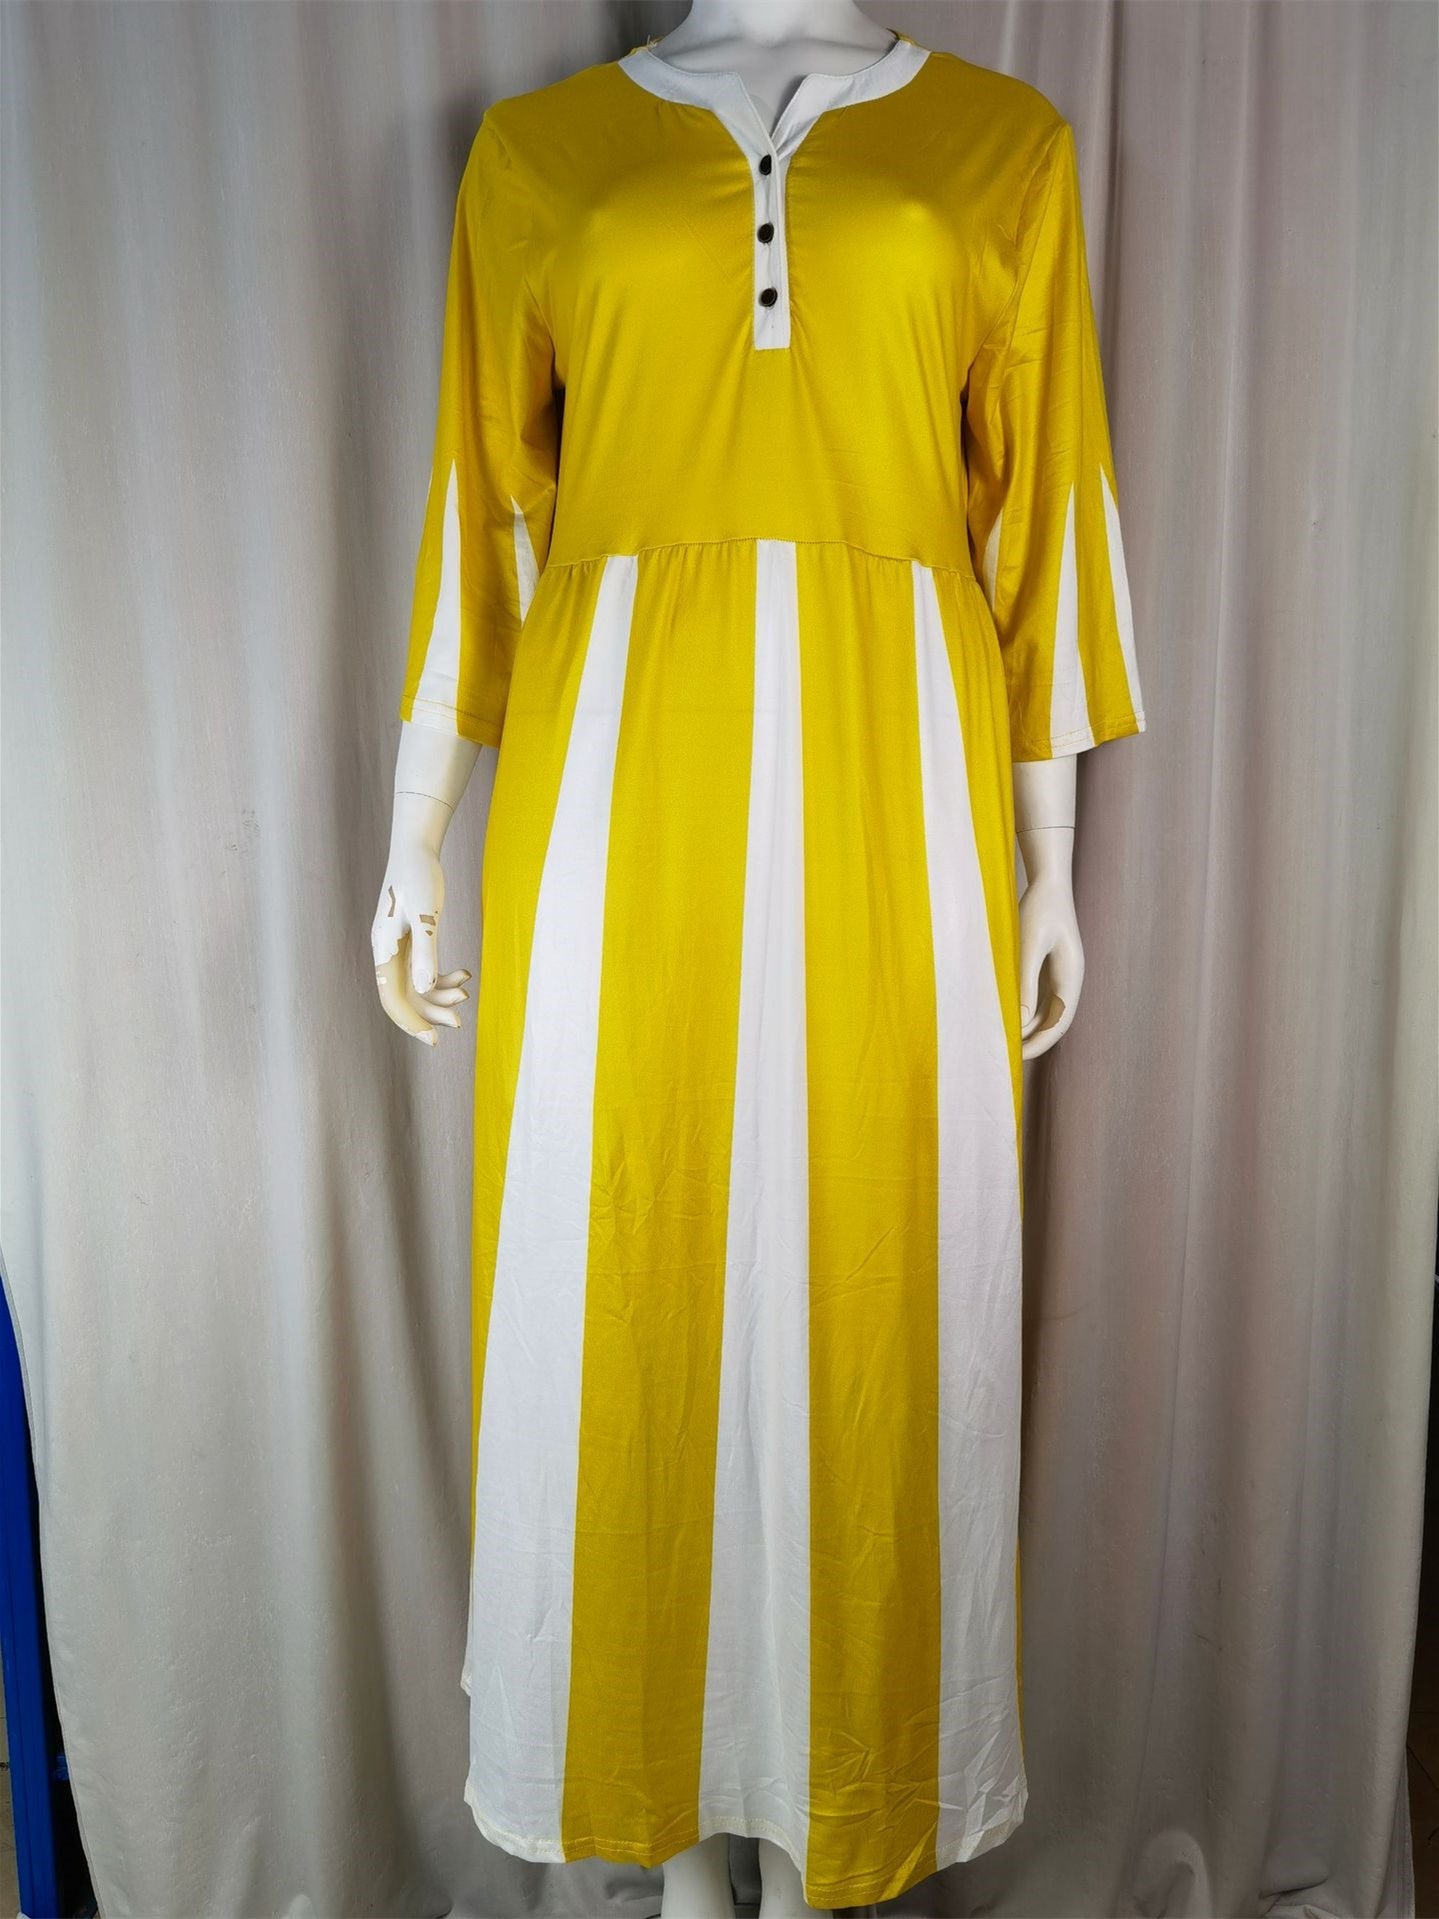 Women Half Sleeve V-neck Striped Button Colorblock Maxi Dress